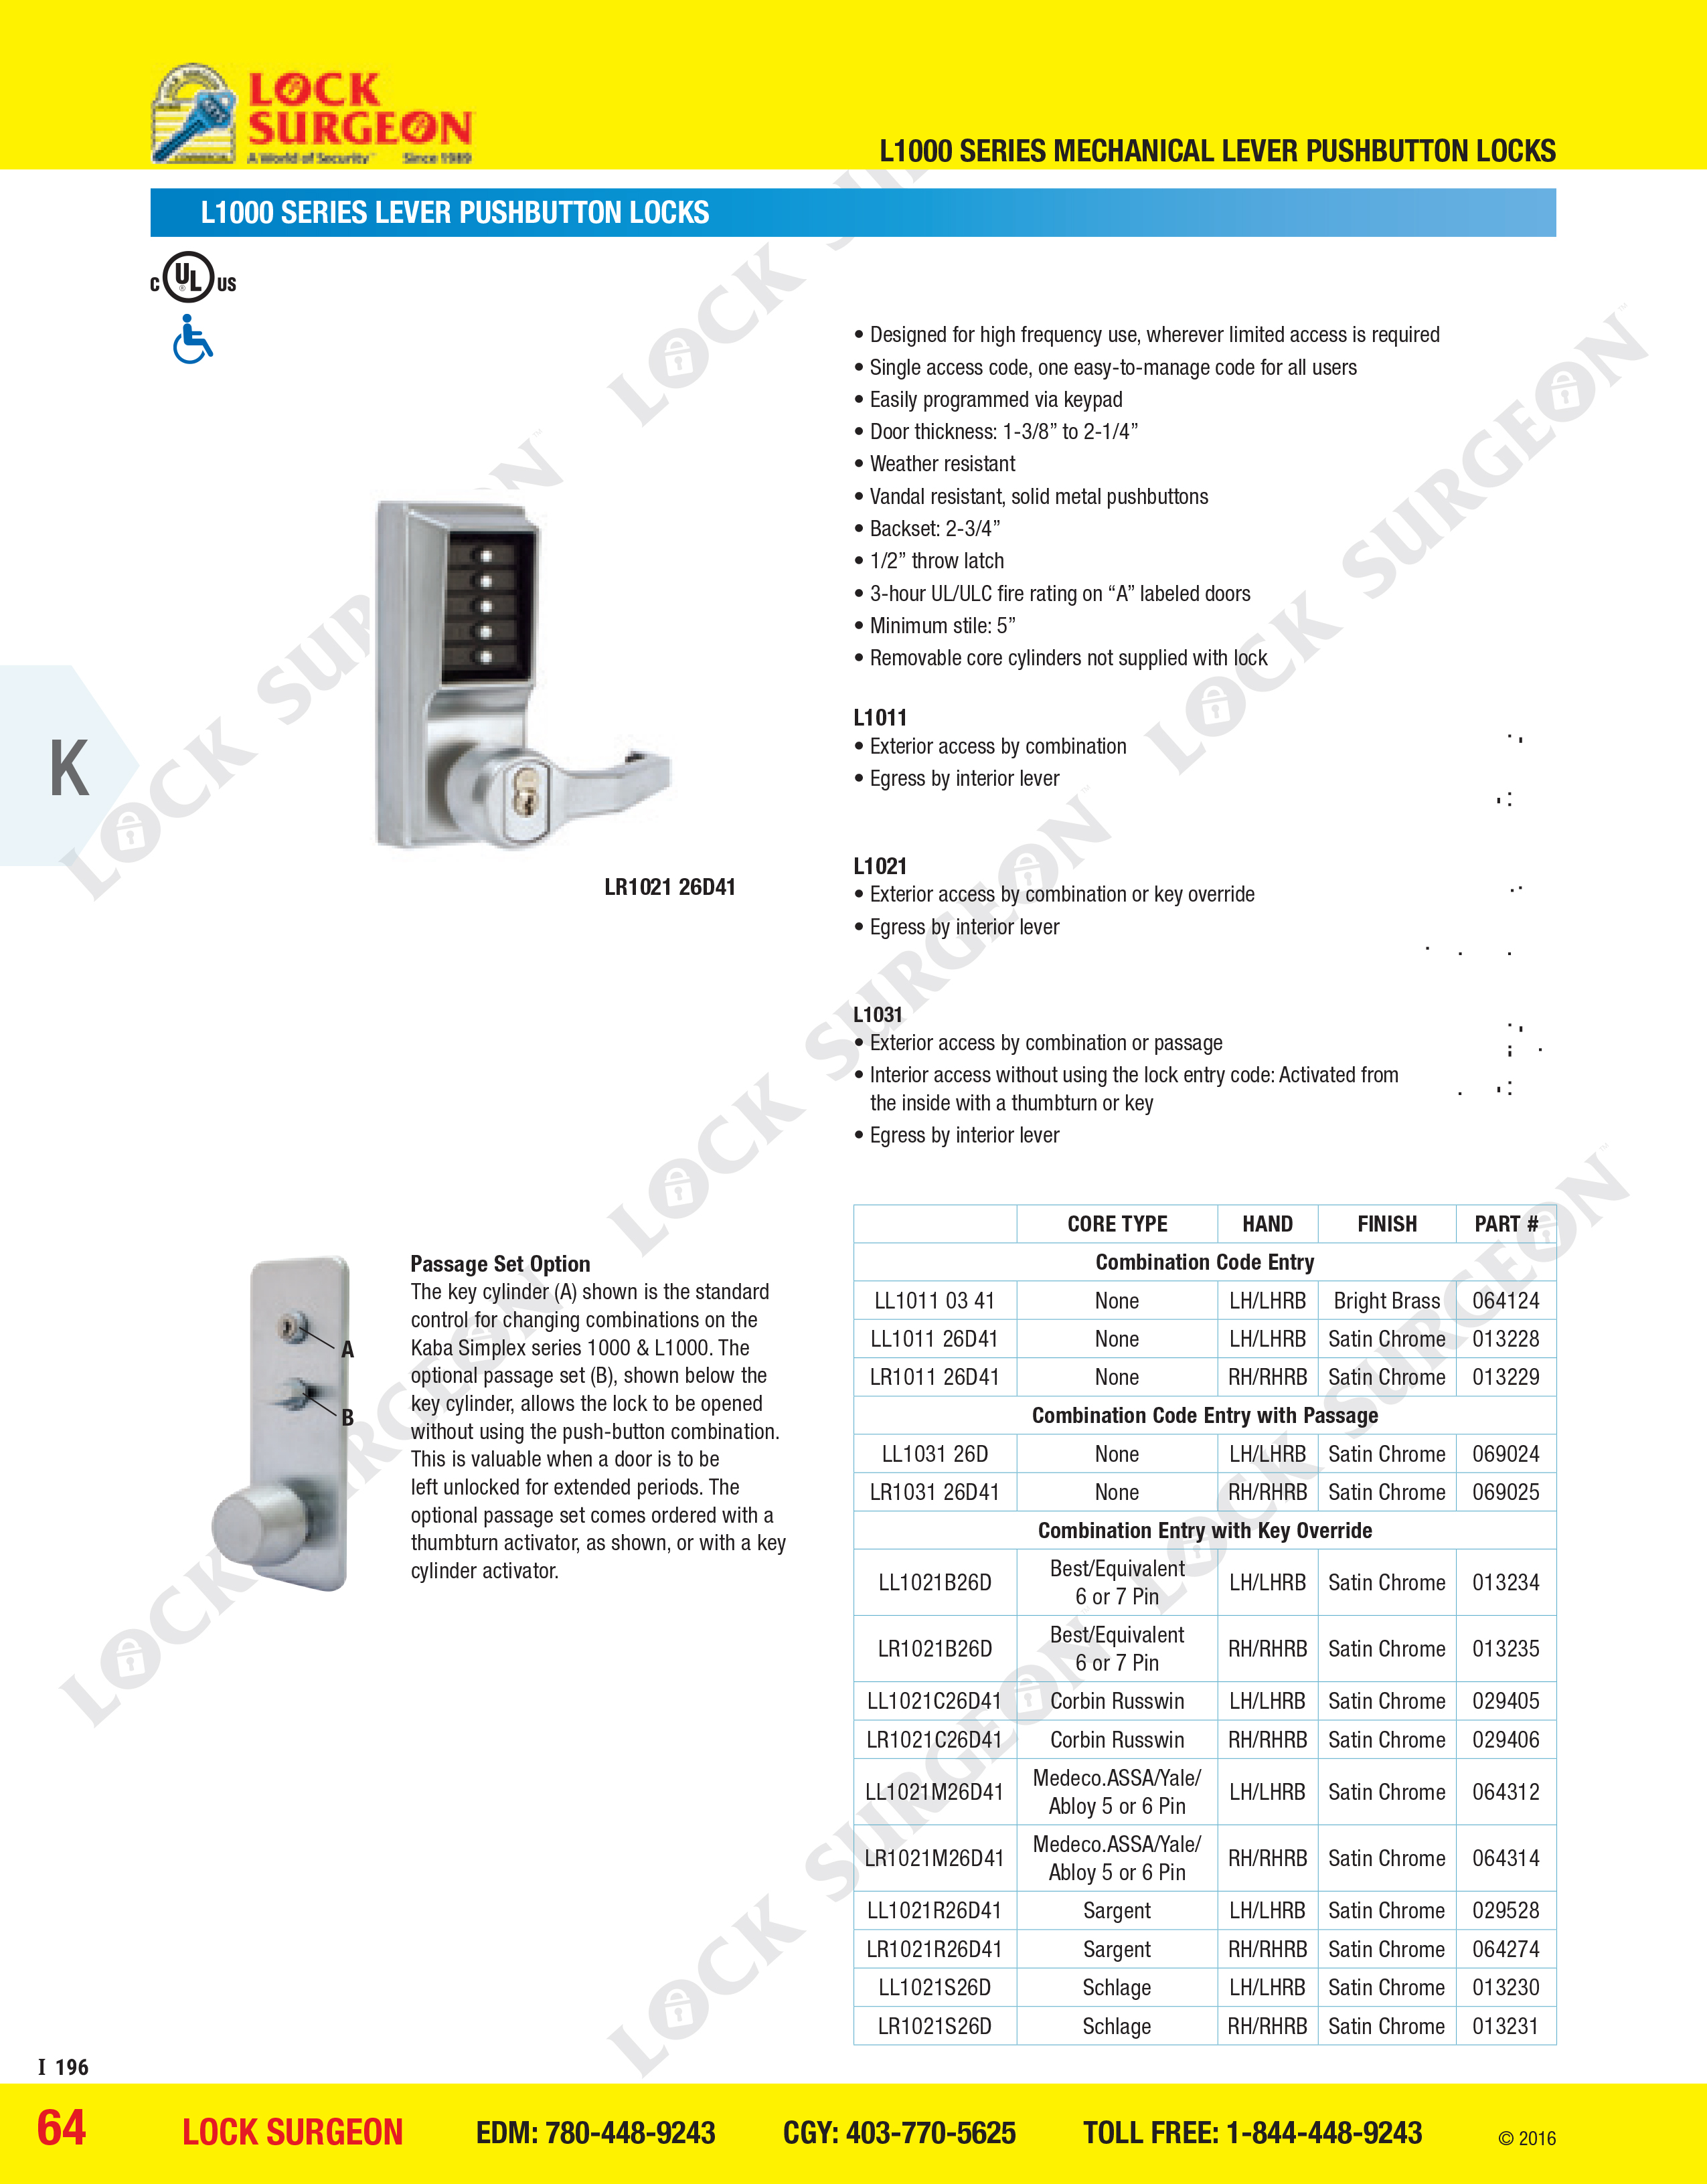 Acheson Kaba-Unican L-1000 series lever push-button locks.